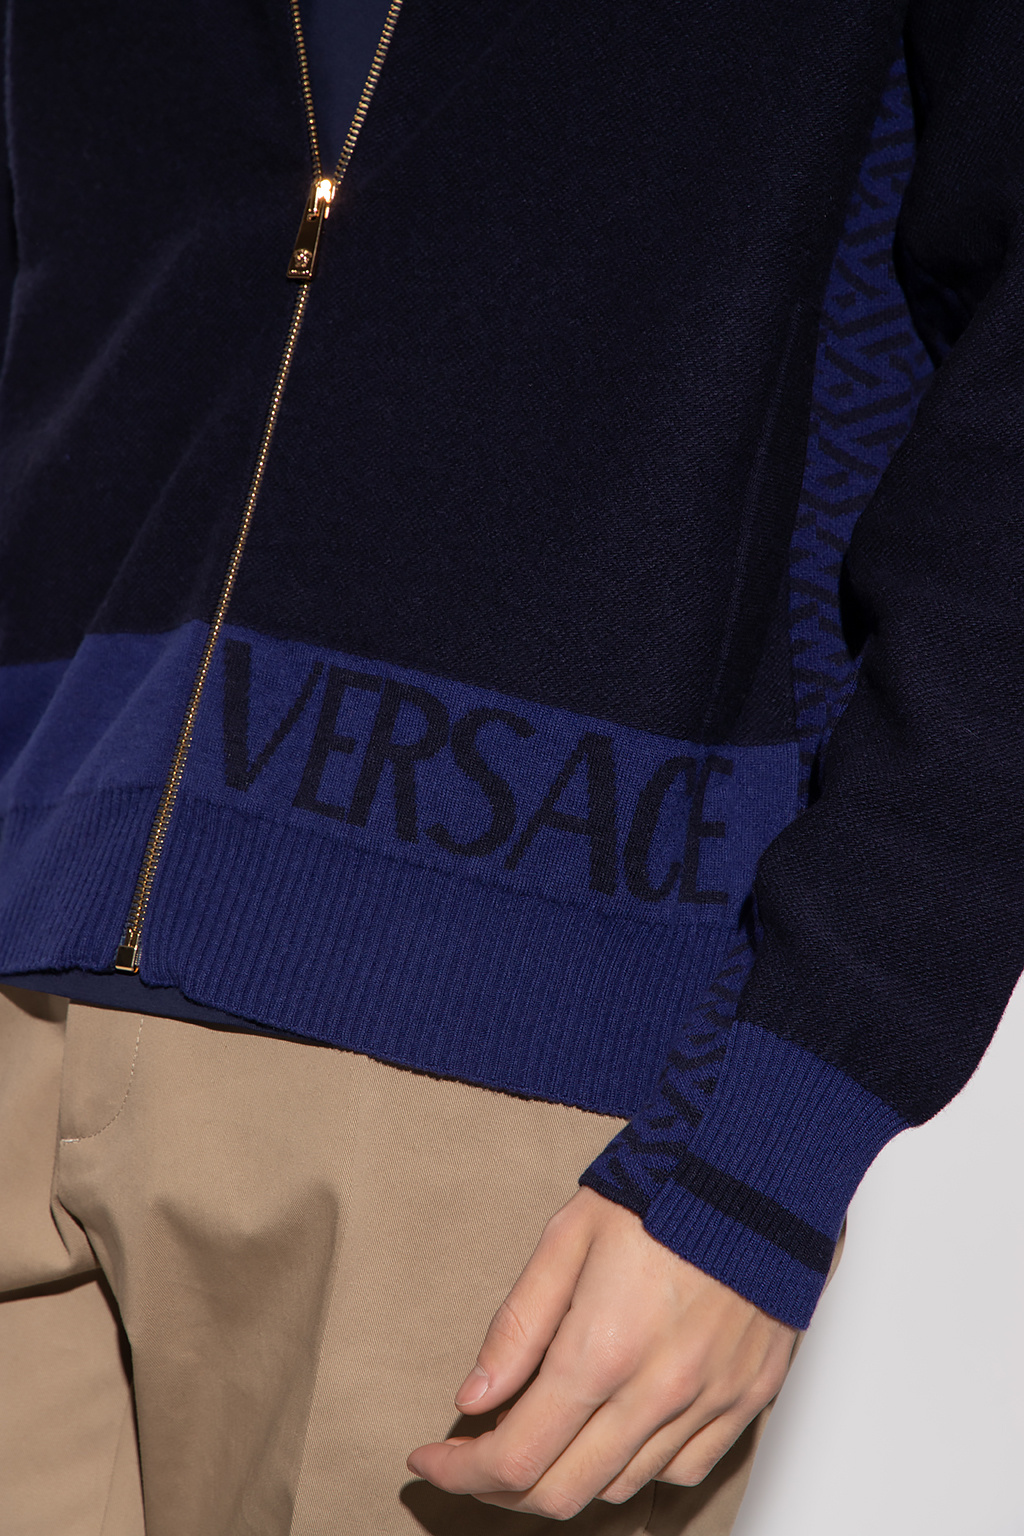 Versace moncler enfant faux shearling down jacket